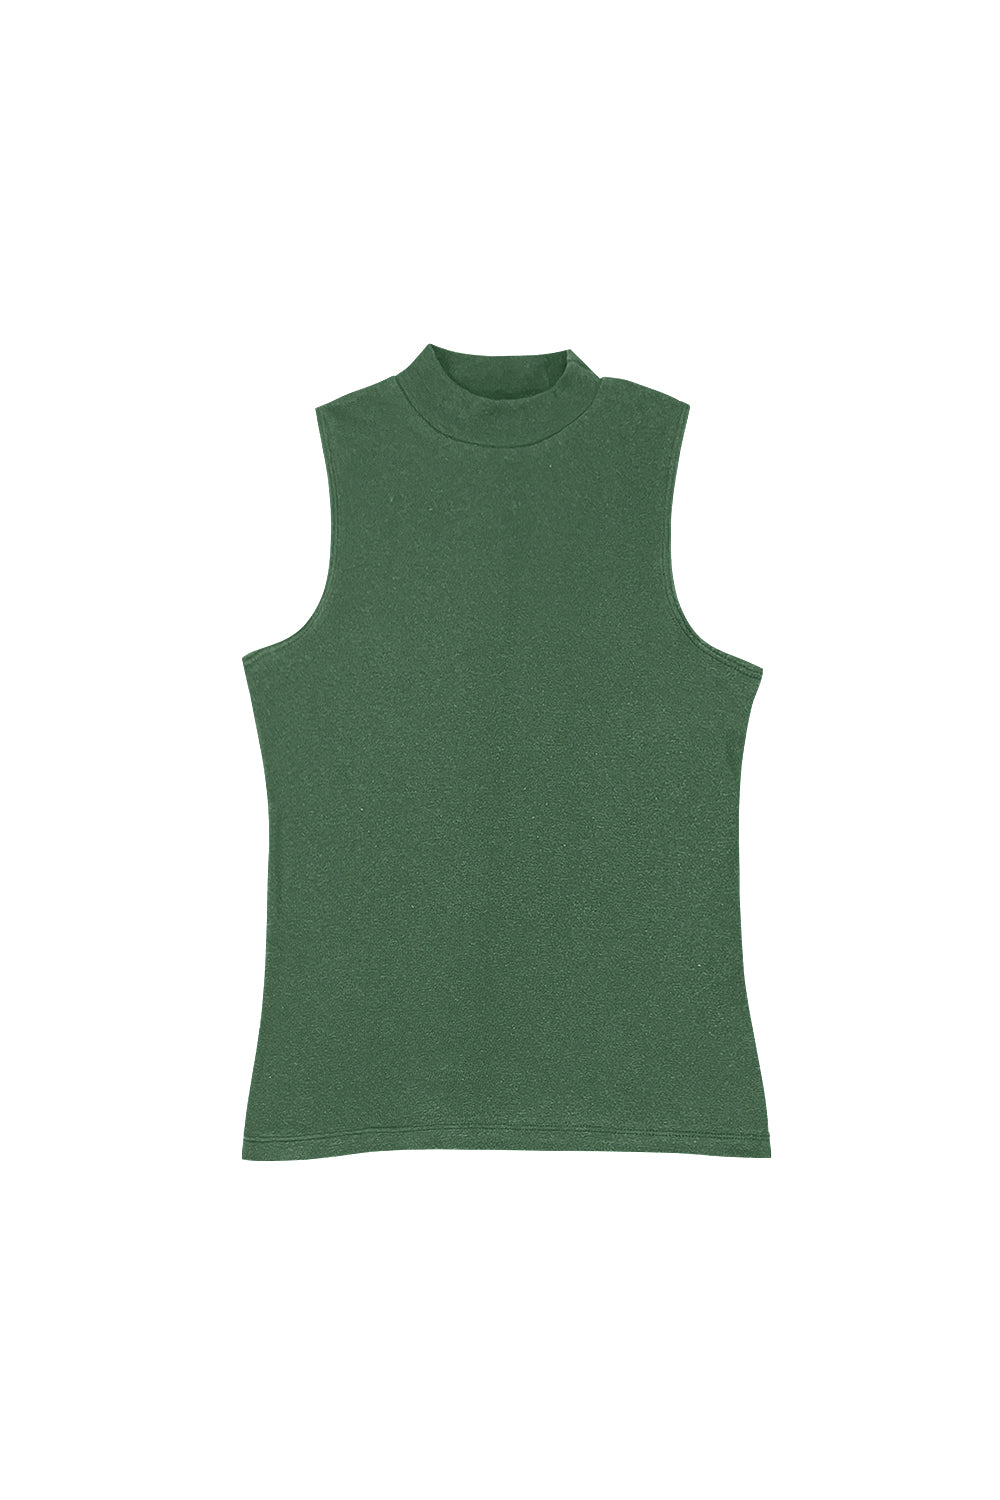 Mariposa Mock Shirt | Jungmaven Hemp Clothing & Accessories / Color: Hunter Green